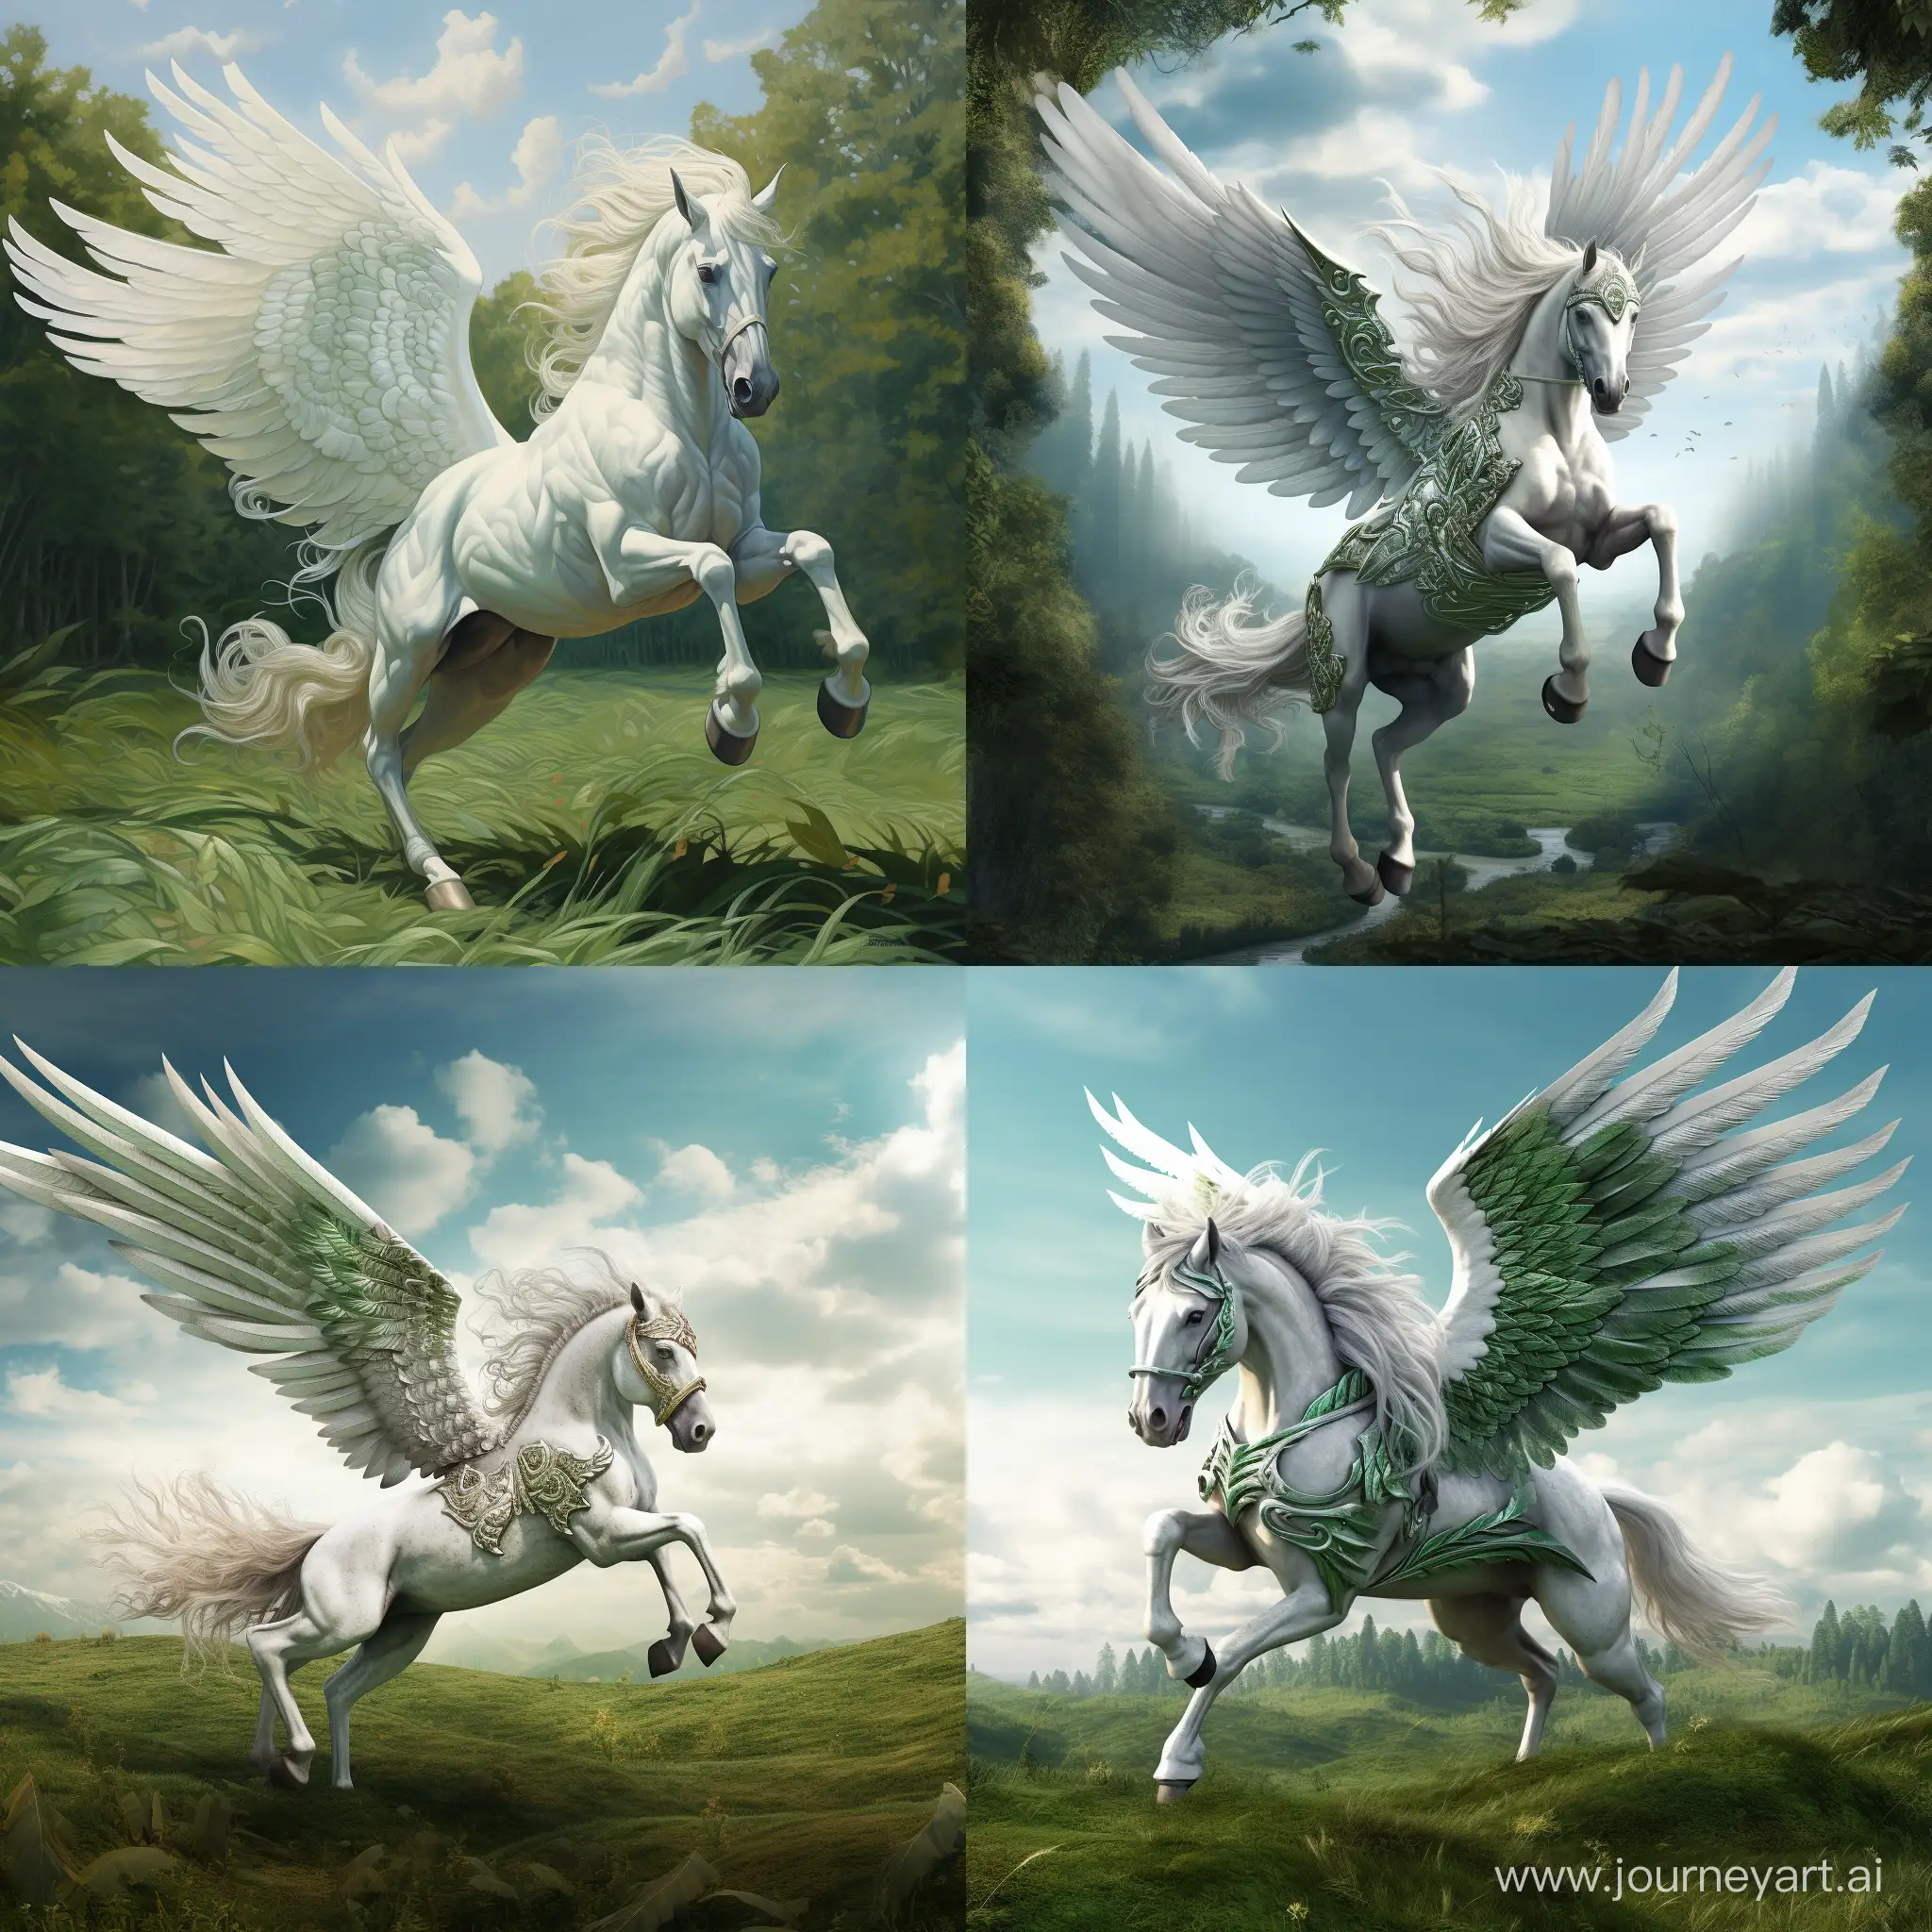 Majestic-White-Pegasus-in-Armor-Galloping-Across-Lush-Green-Field